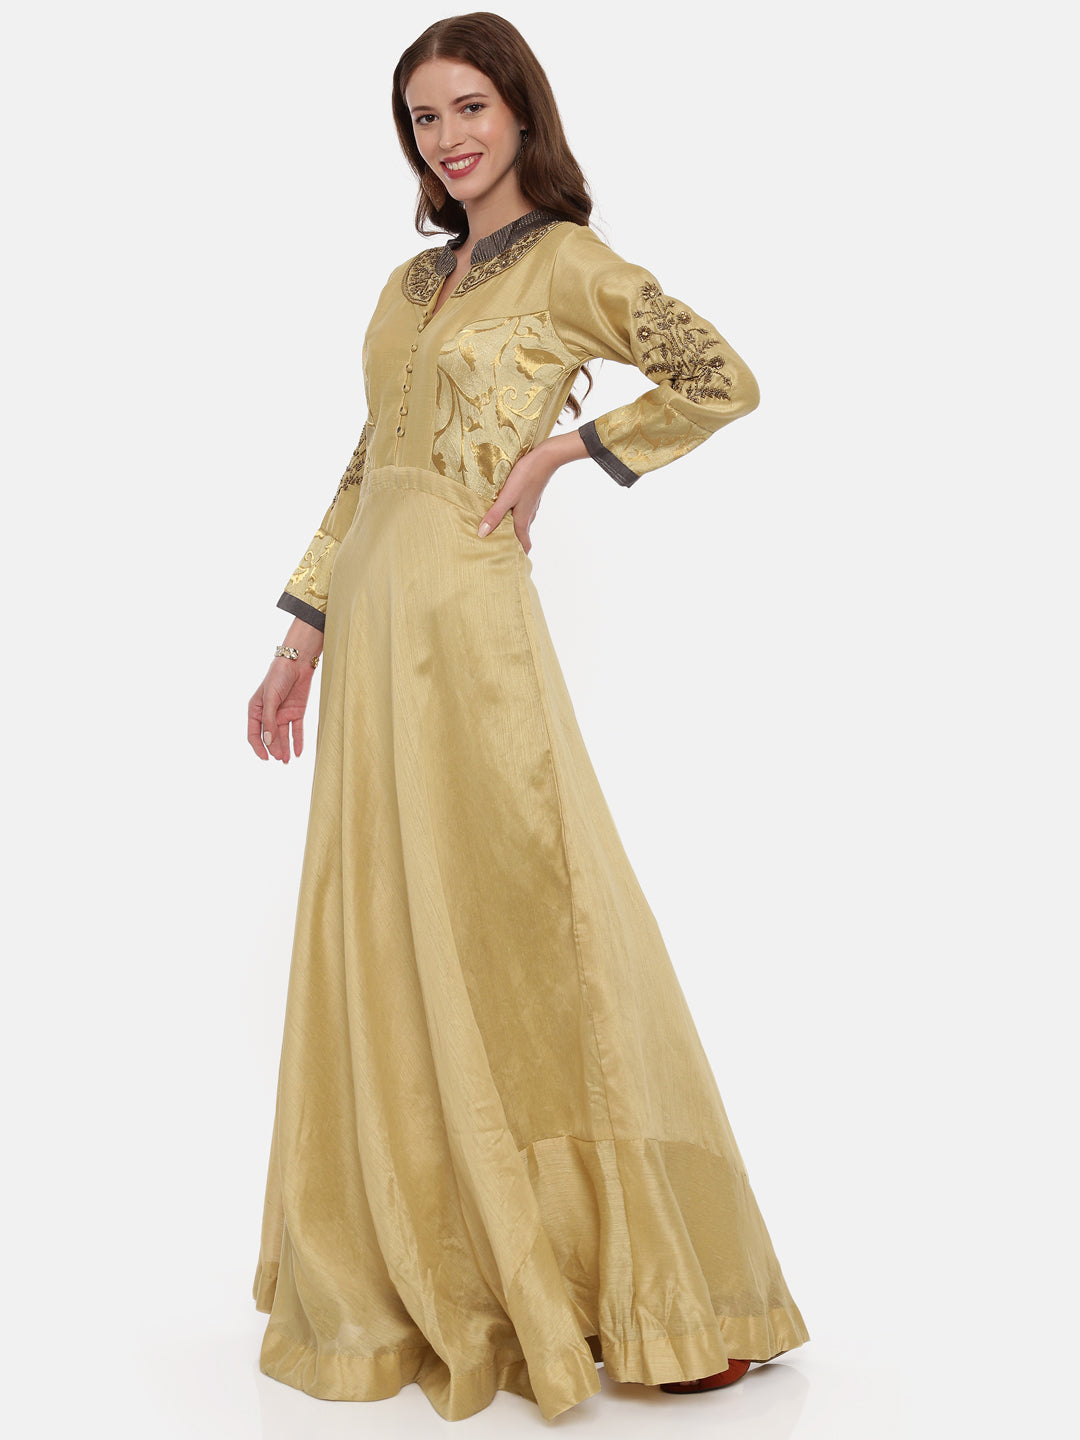 Neeru's Beige Color Chanderi Silk Fabric Gown